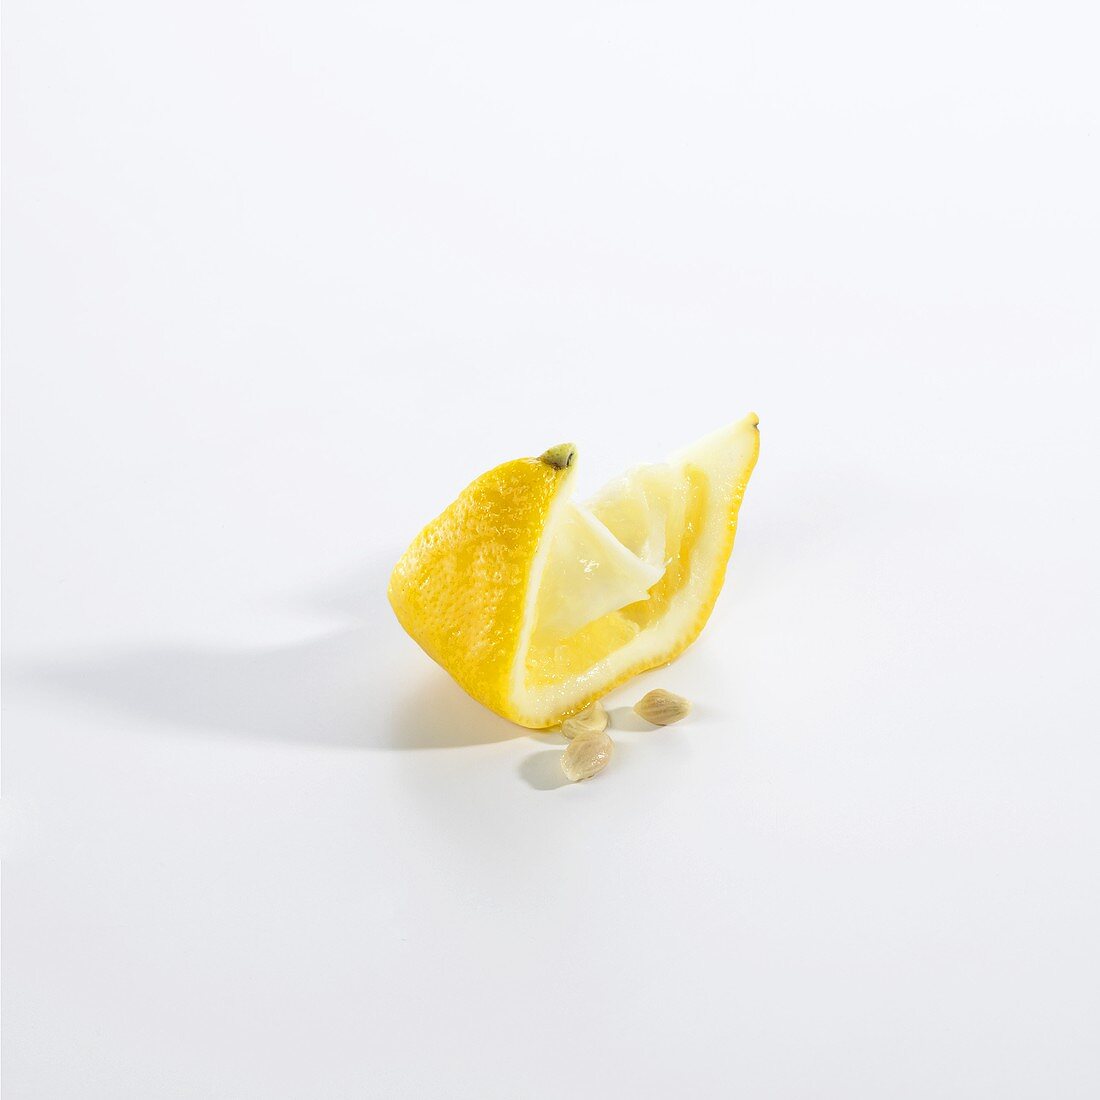 Squeezed lemon wedge